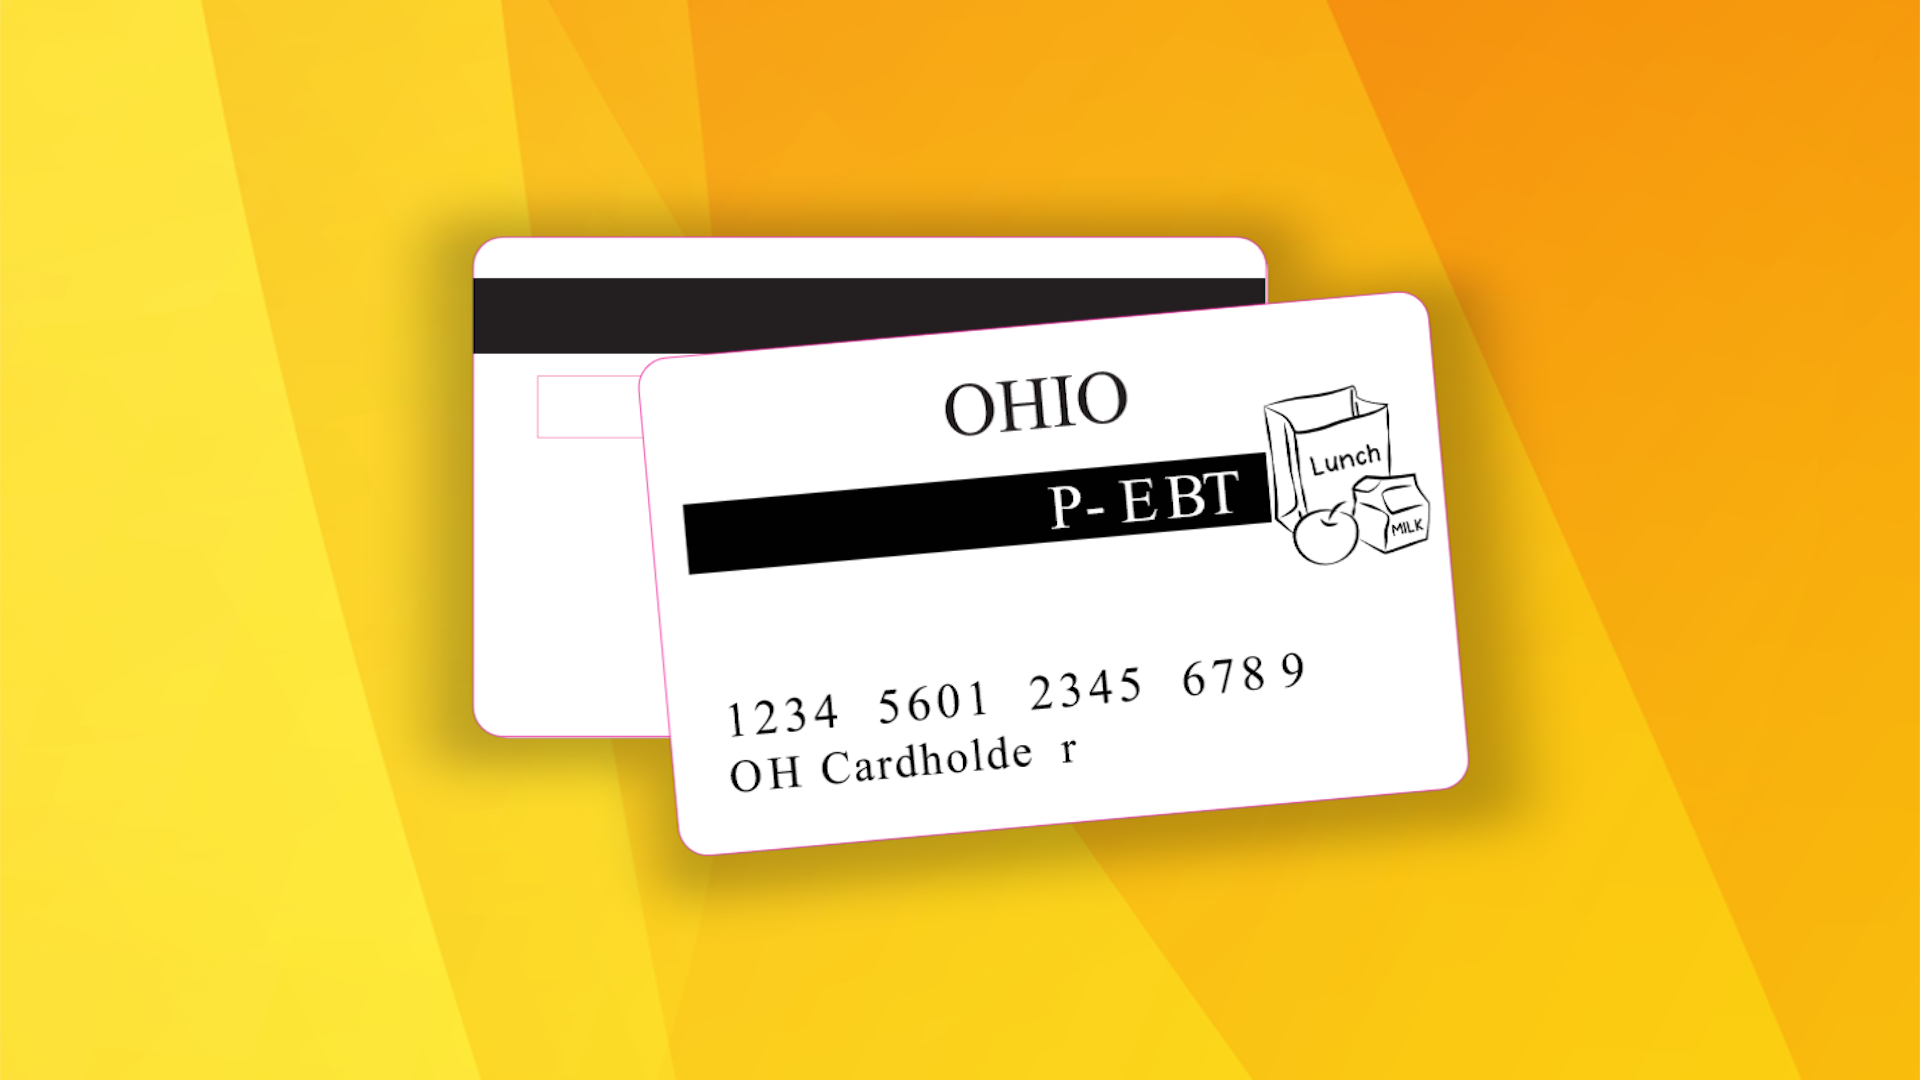 Ohio Ebt Card Customer Service 20120708OSECLSC0447 This